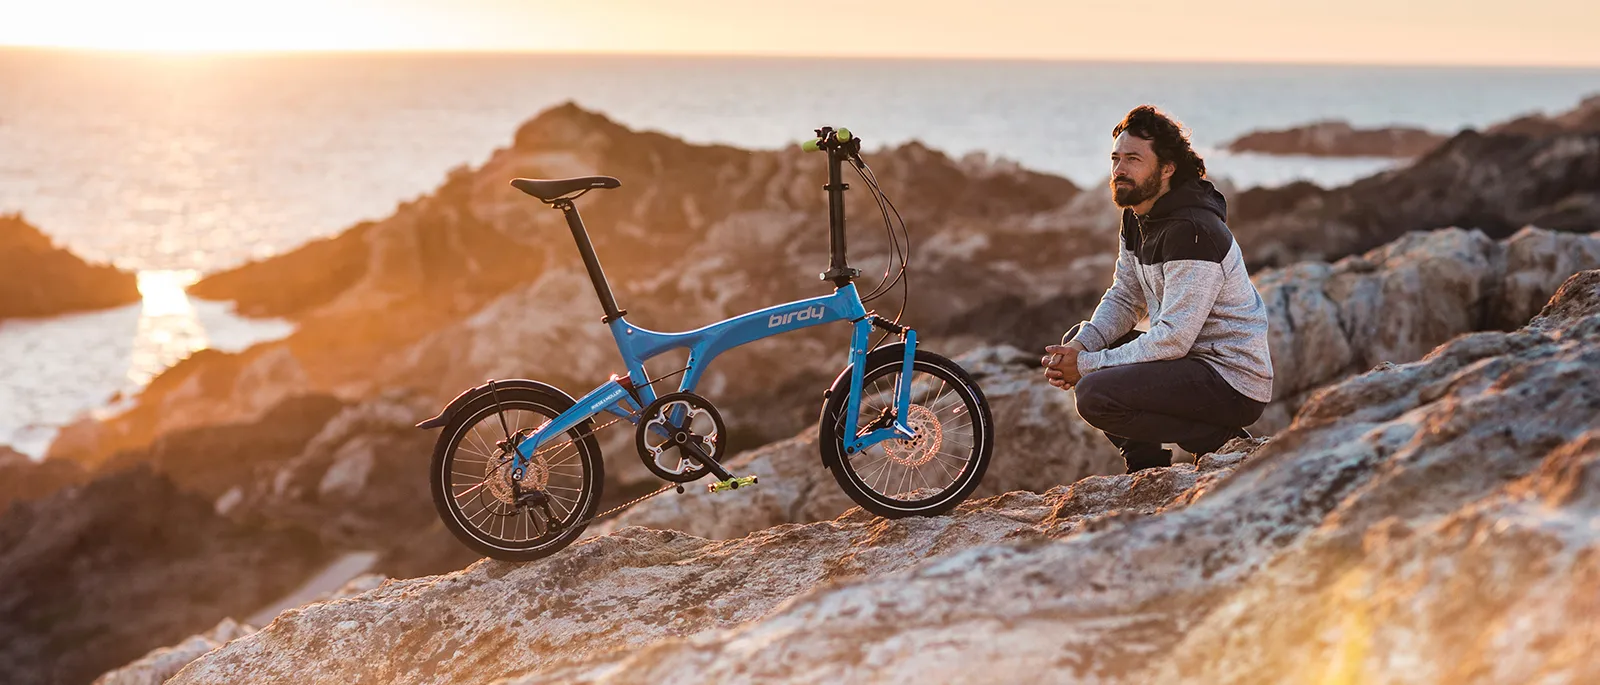 A sunset coastal scene with a man and his Birdy folding bike.